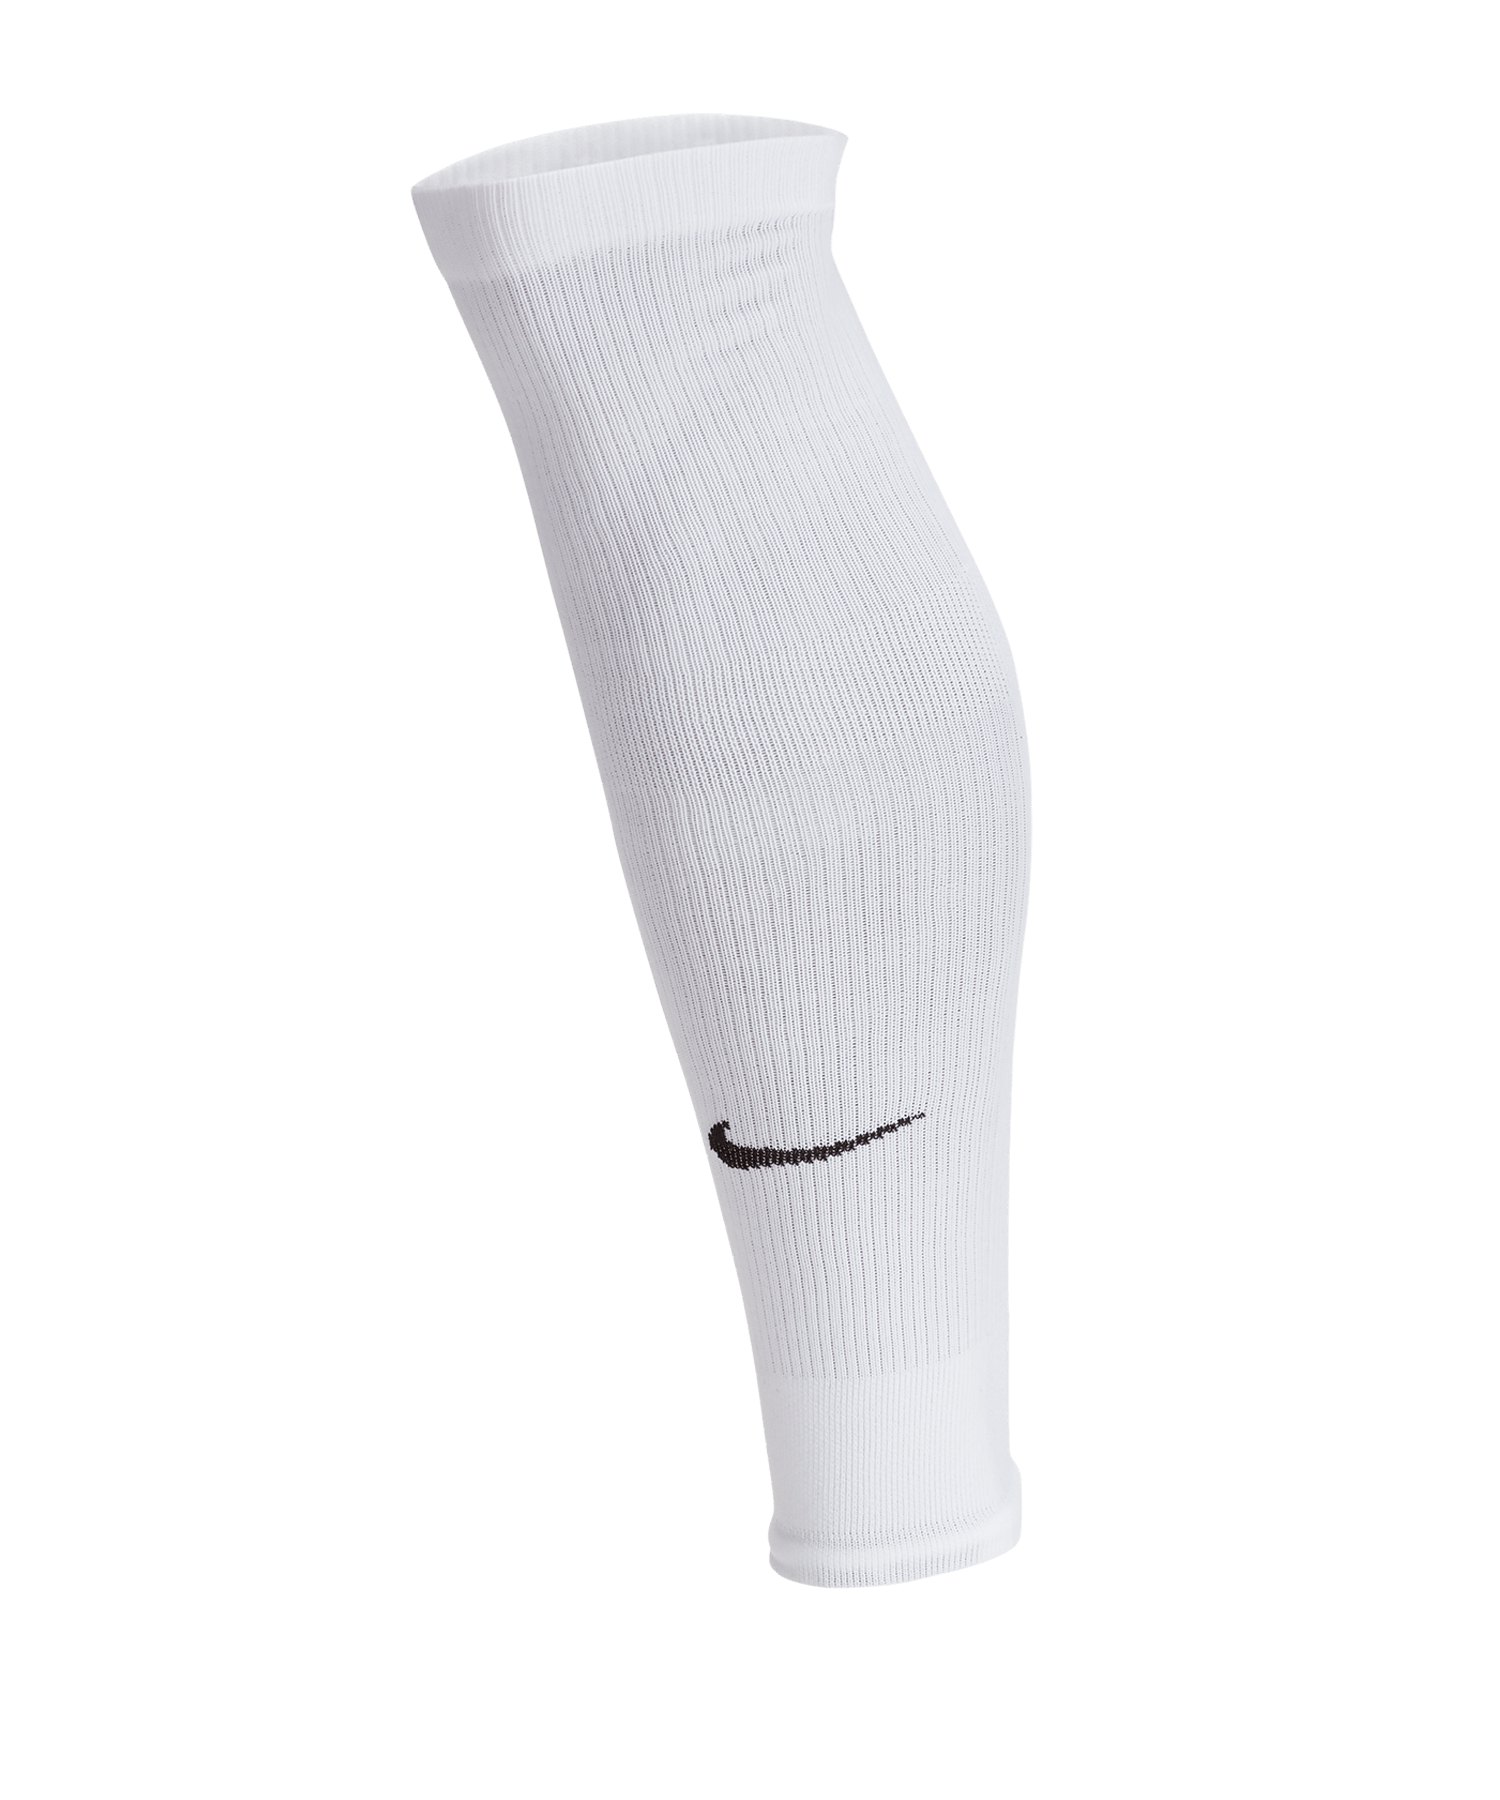 Nike Squad Fussball Leg Sleeves Weiss F100 - weiss